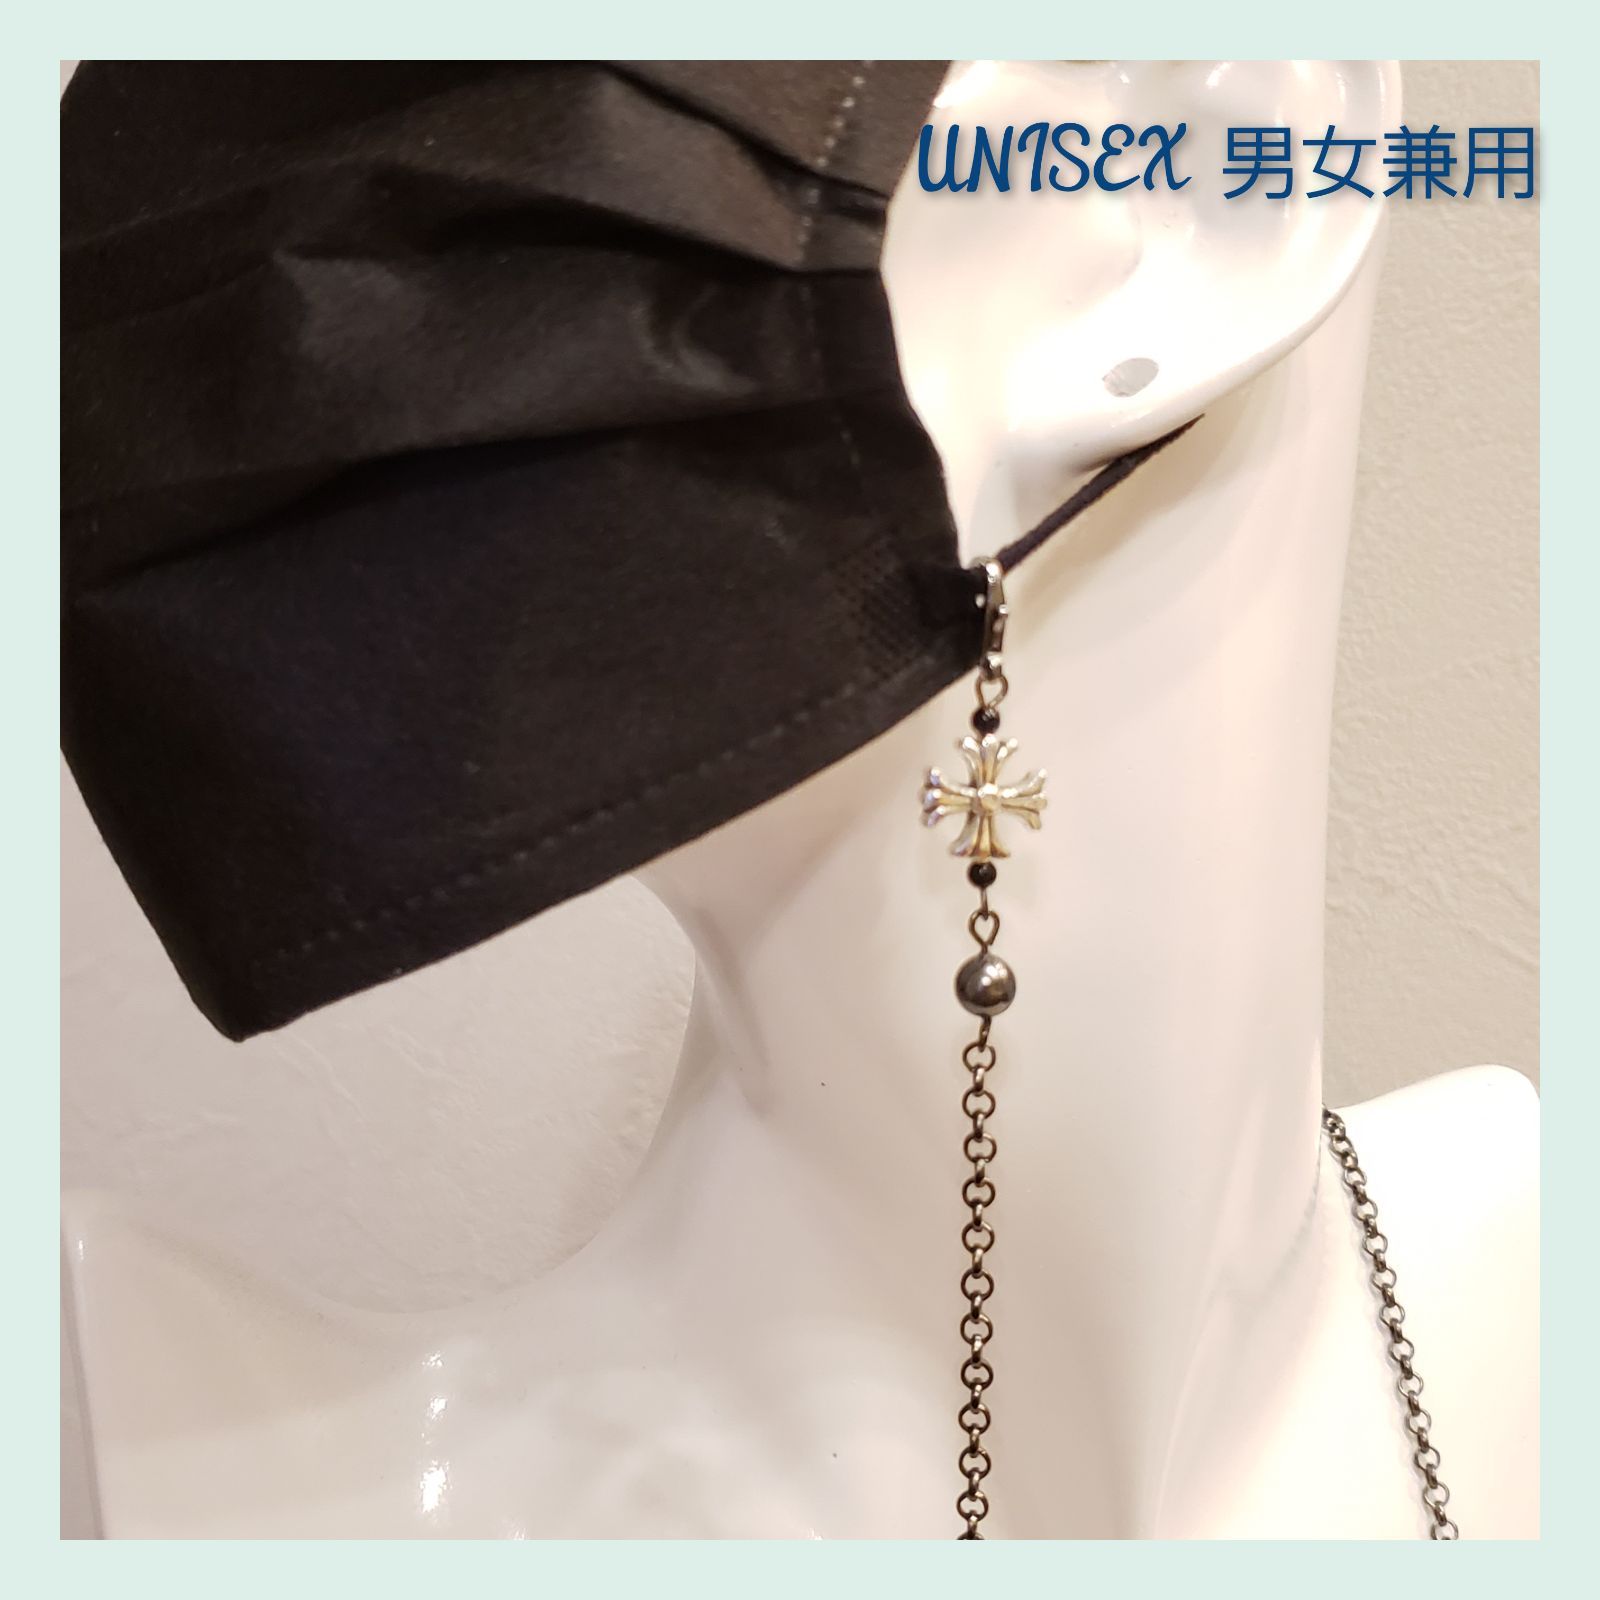 No.U9 UNISEX ユニセックス マスクコード メガネコード